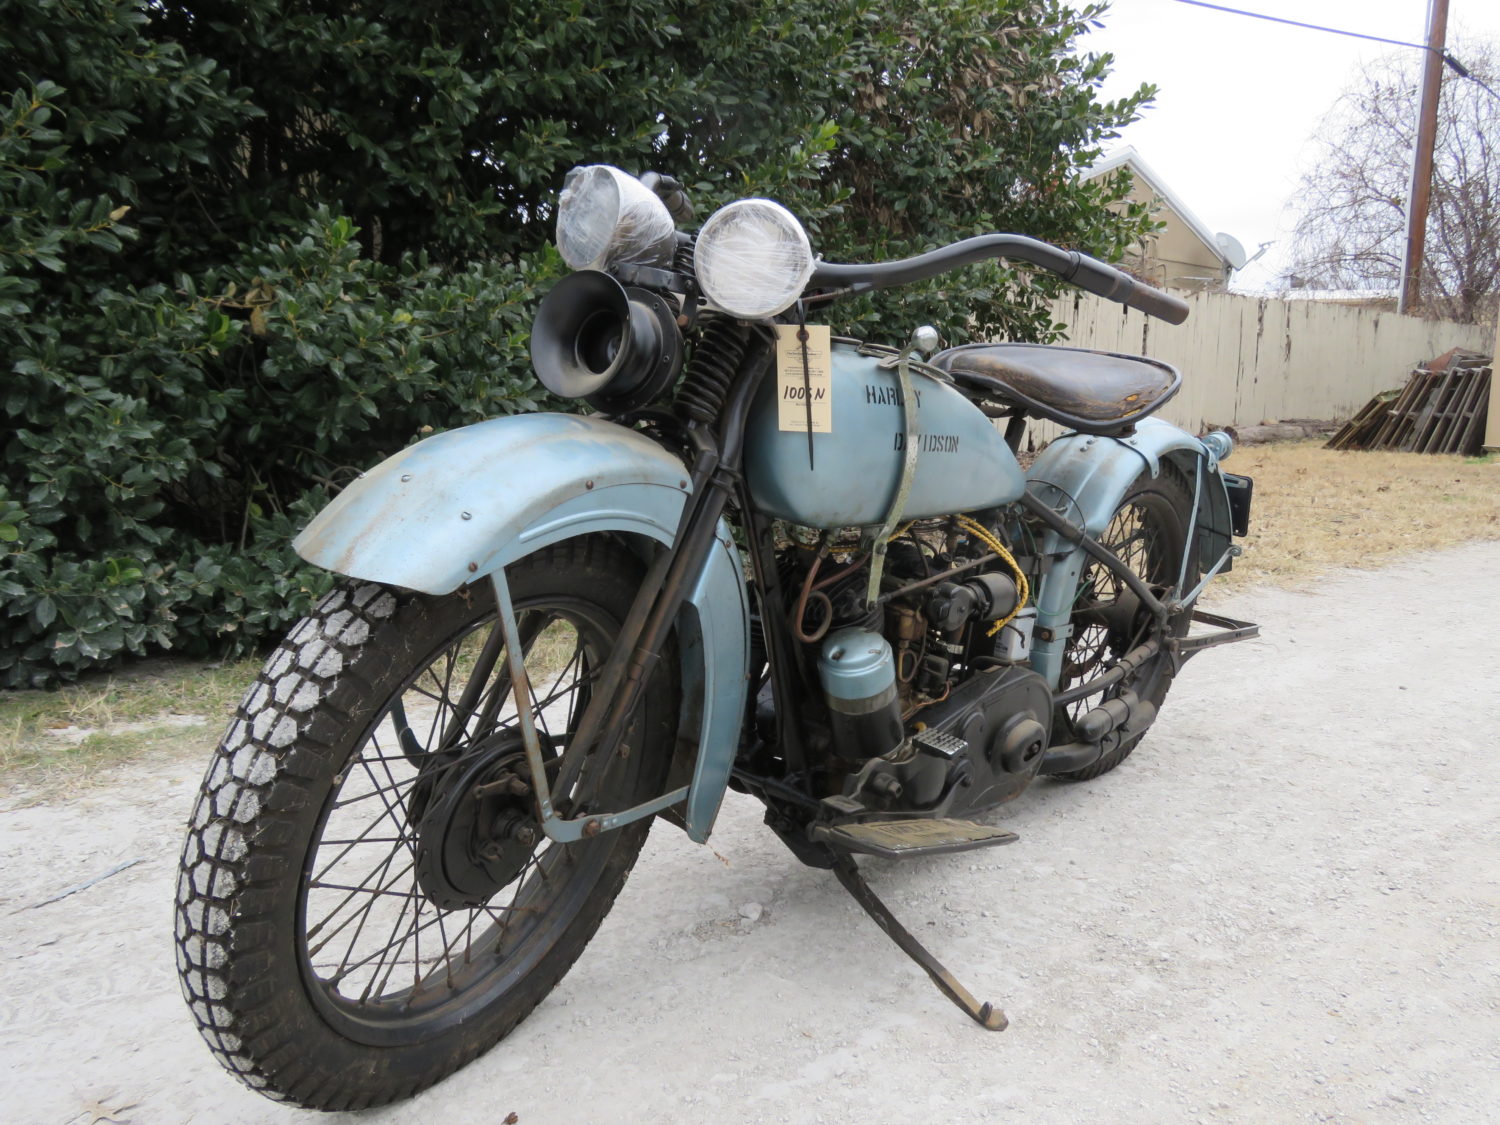 Vintage Harley Davidson Motorcycles & Parts Auction- The Jon Neuman Vintage Harley Davidson Collection  - image 7